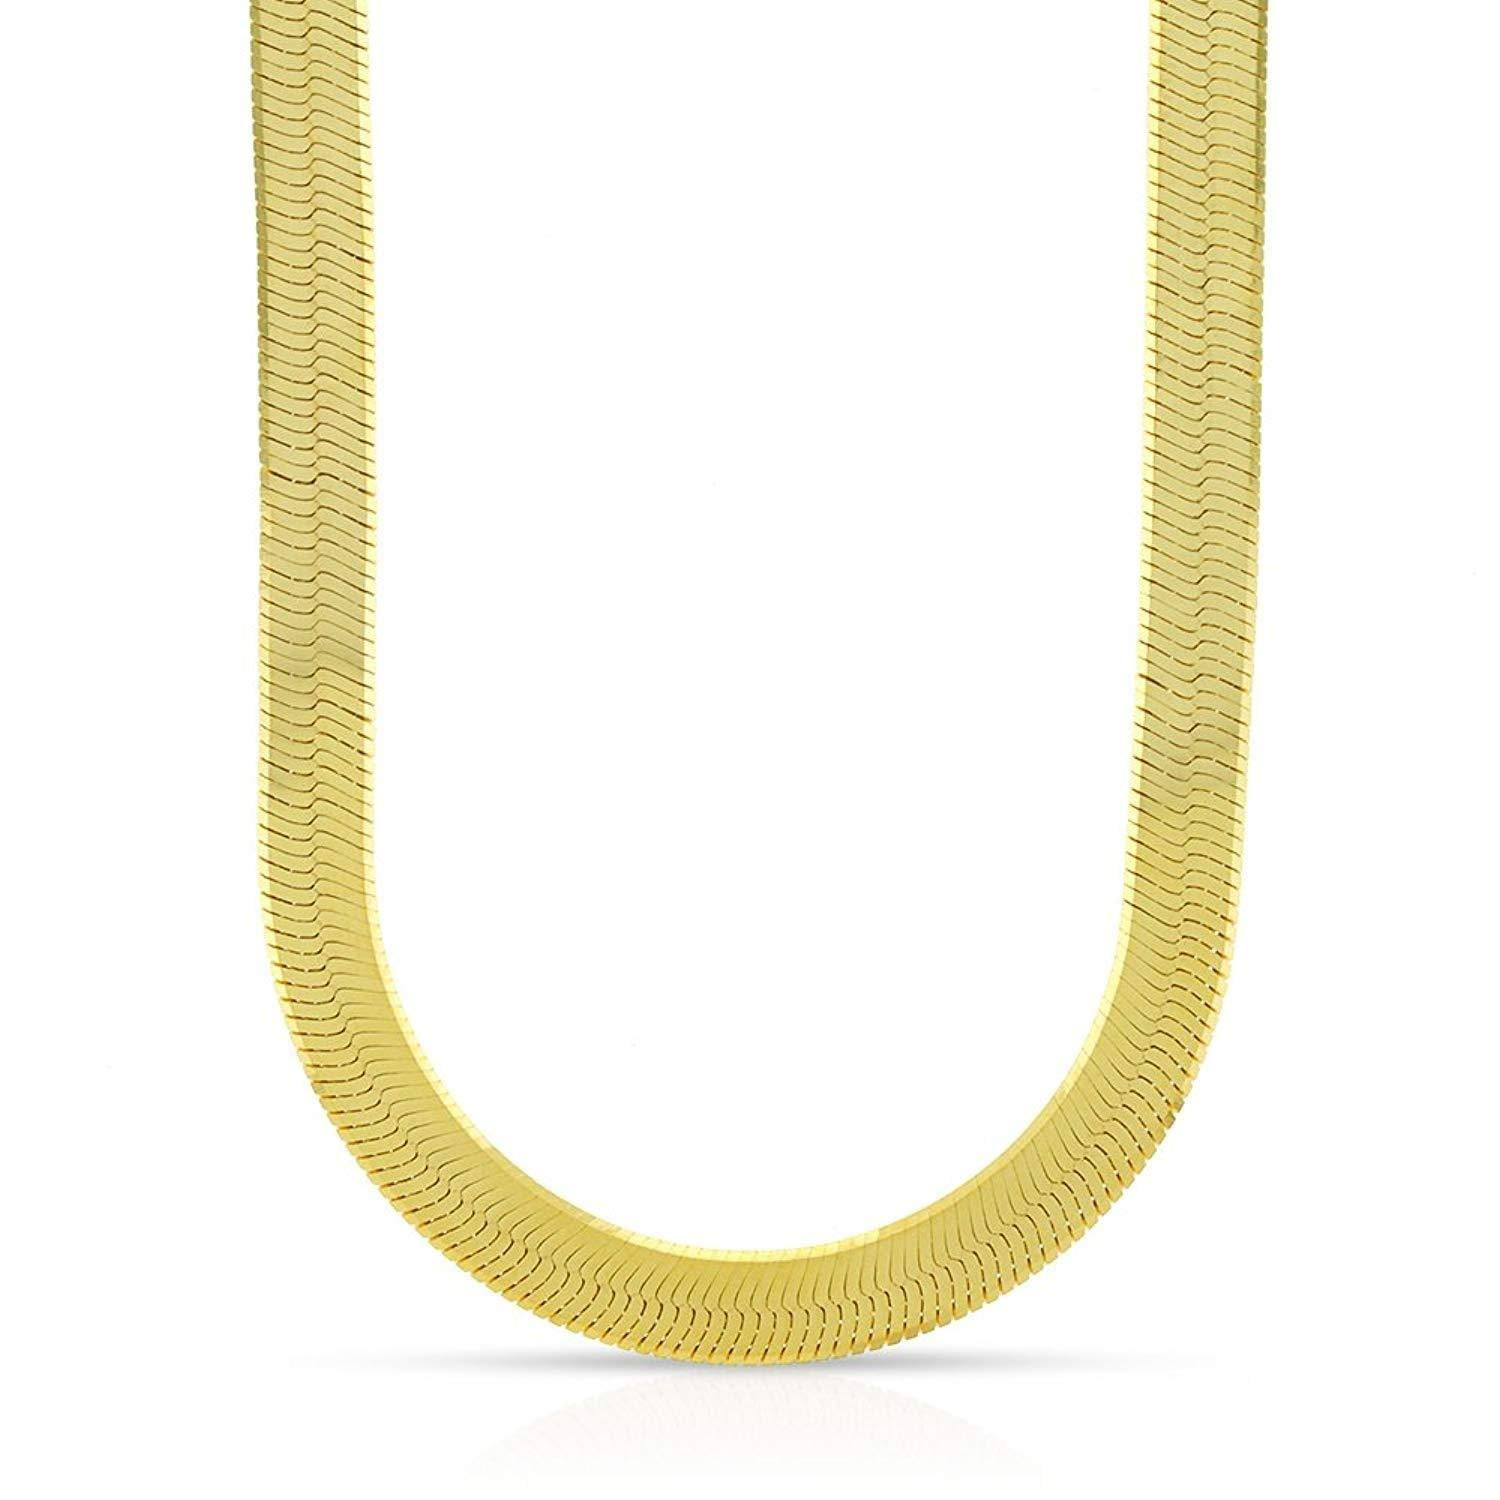 Next Level Jewelry - 14K Yellow Gold 6MM Imperial Herringbone Chain